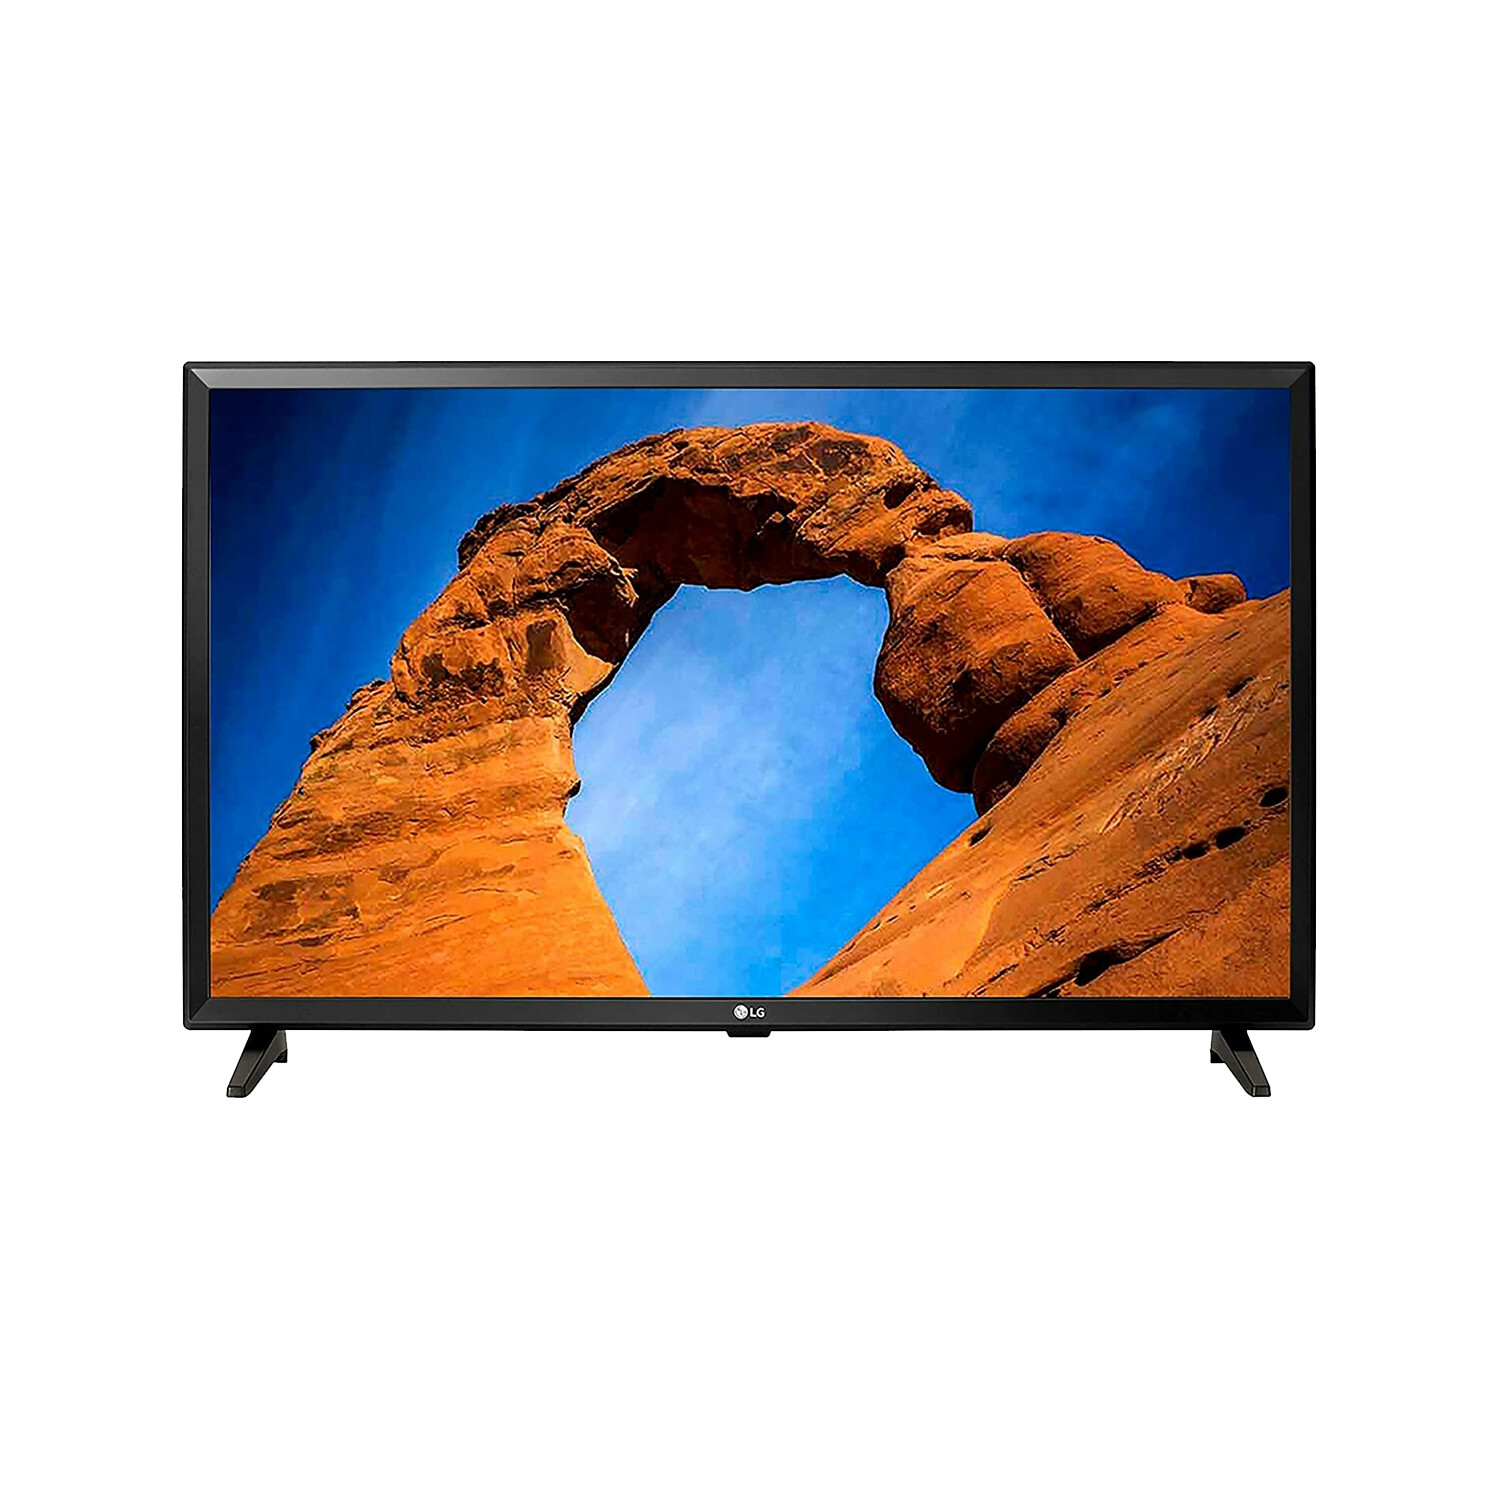 LG 80 cm (32 Inches) HD Ready LED TV 32LK526BPTA (Black) (2018 model)